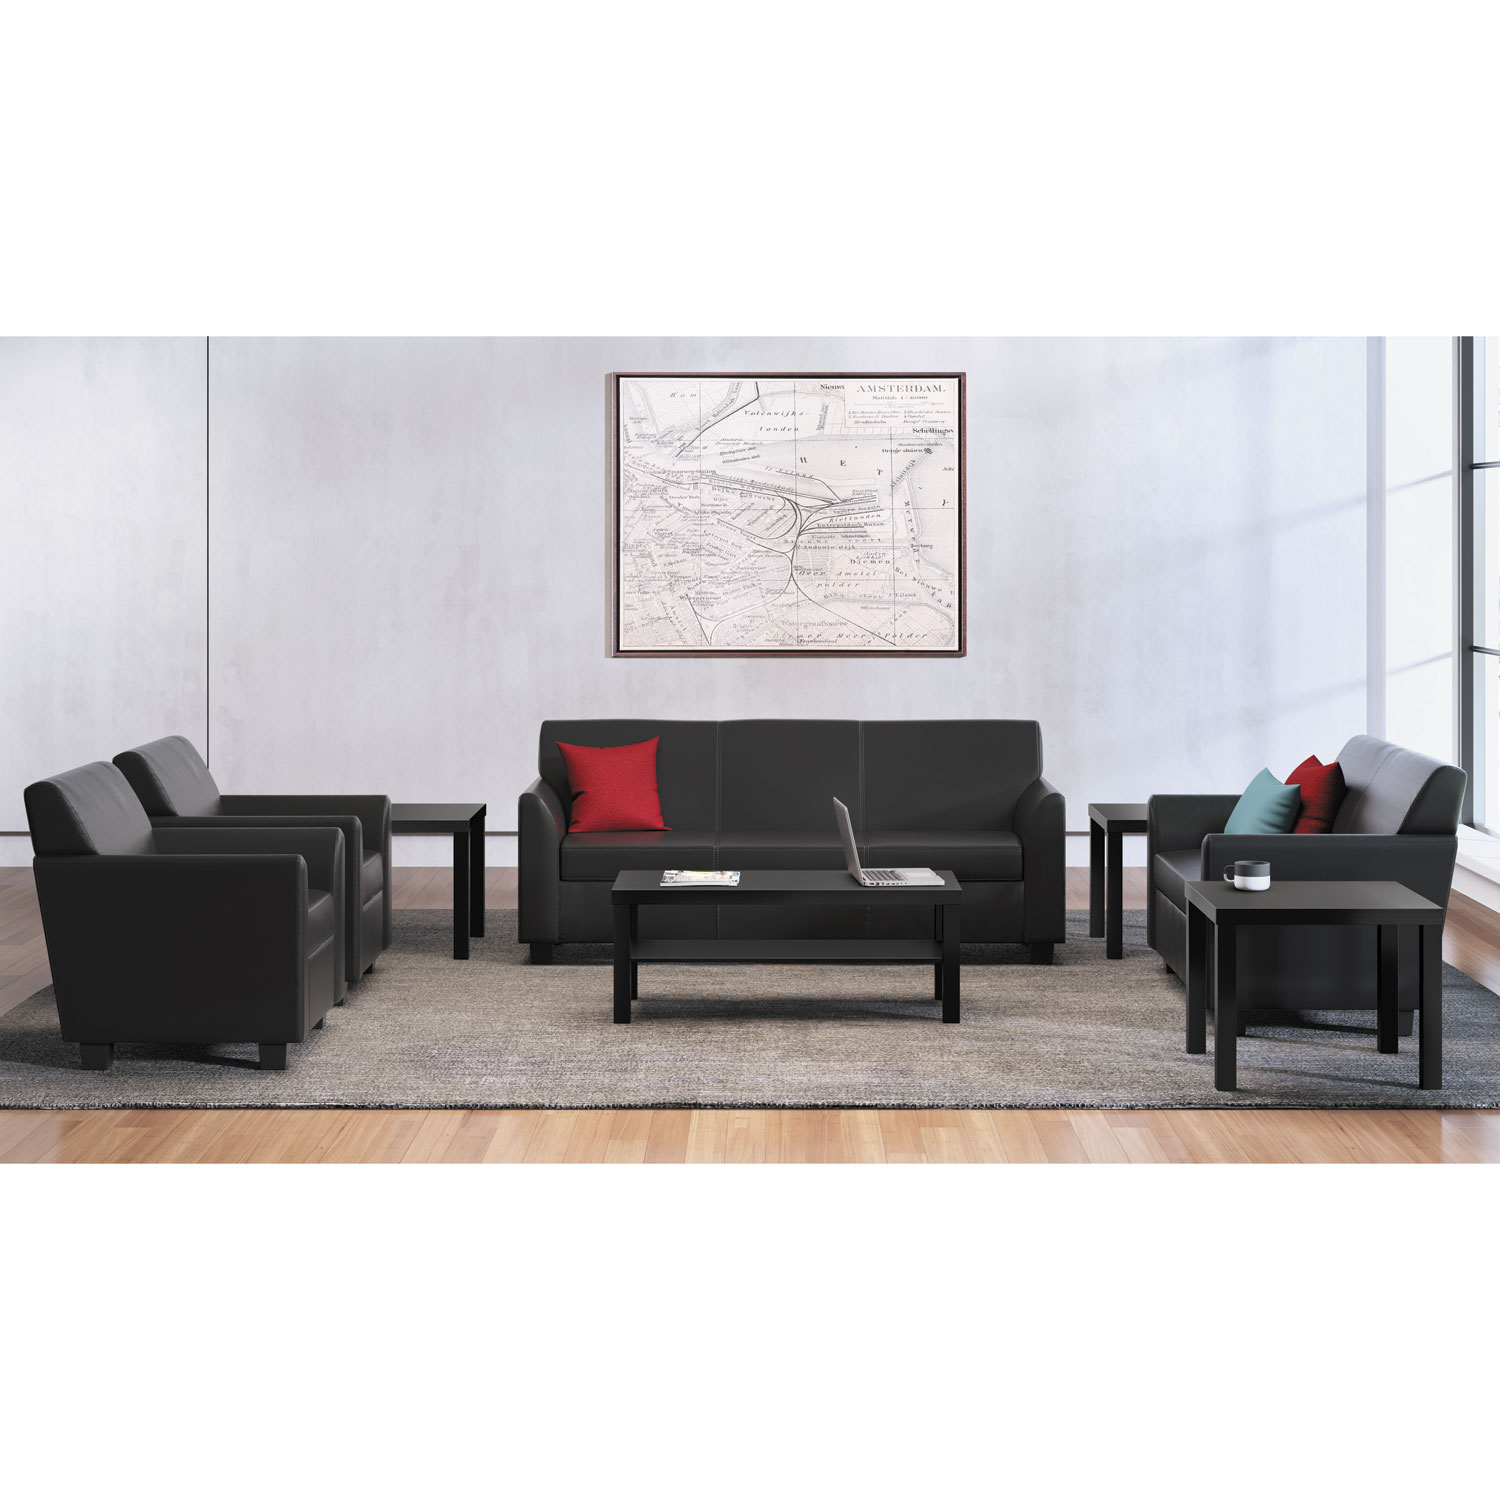  HON HVL873.SB11 Circulate Leather Reception Three-Cushion Sofa, 73w x 28.75d x 32h, Black (BSXVL873SB11) 